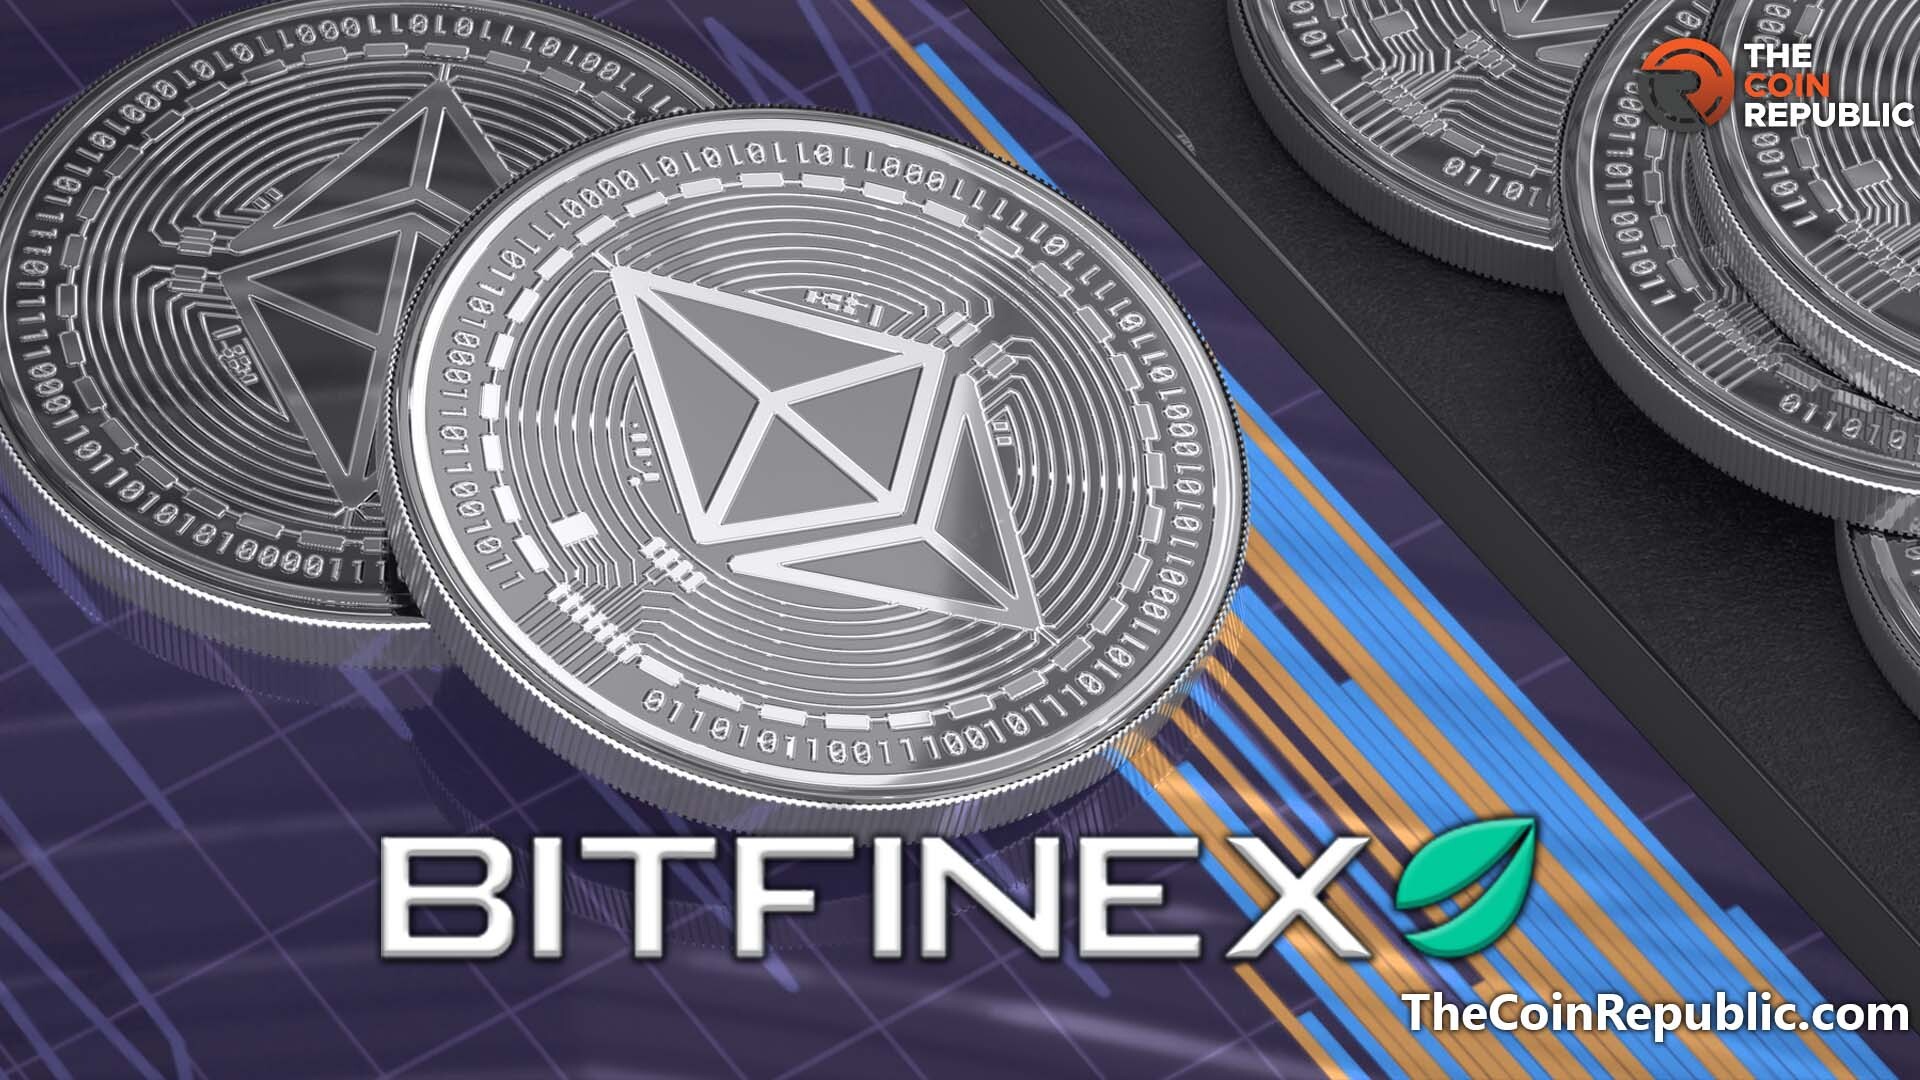 Should i split bitcoin on bitfinex